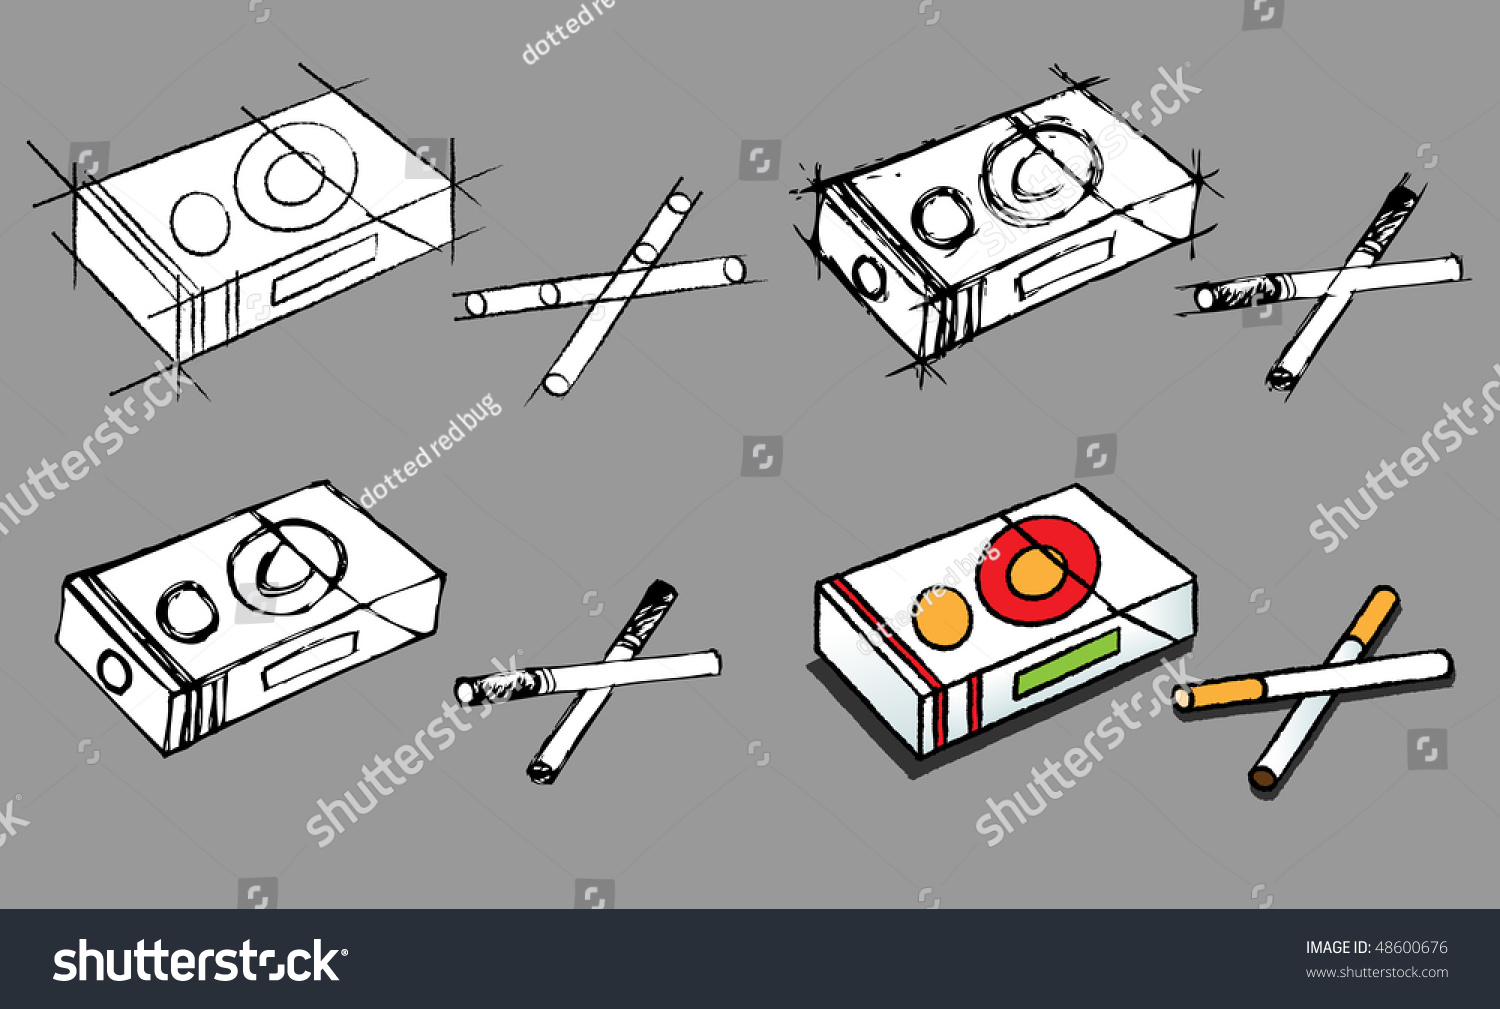 Vector Illustration Of Cigarette Boxes And Cigarettes - 48600676